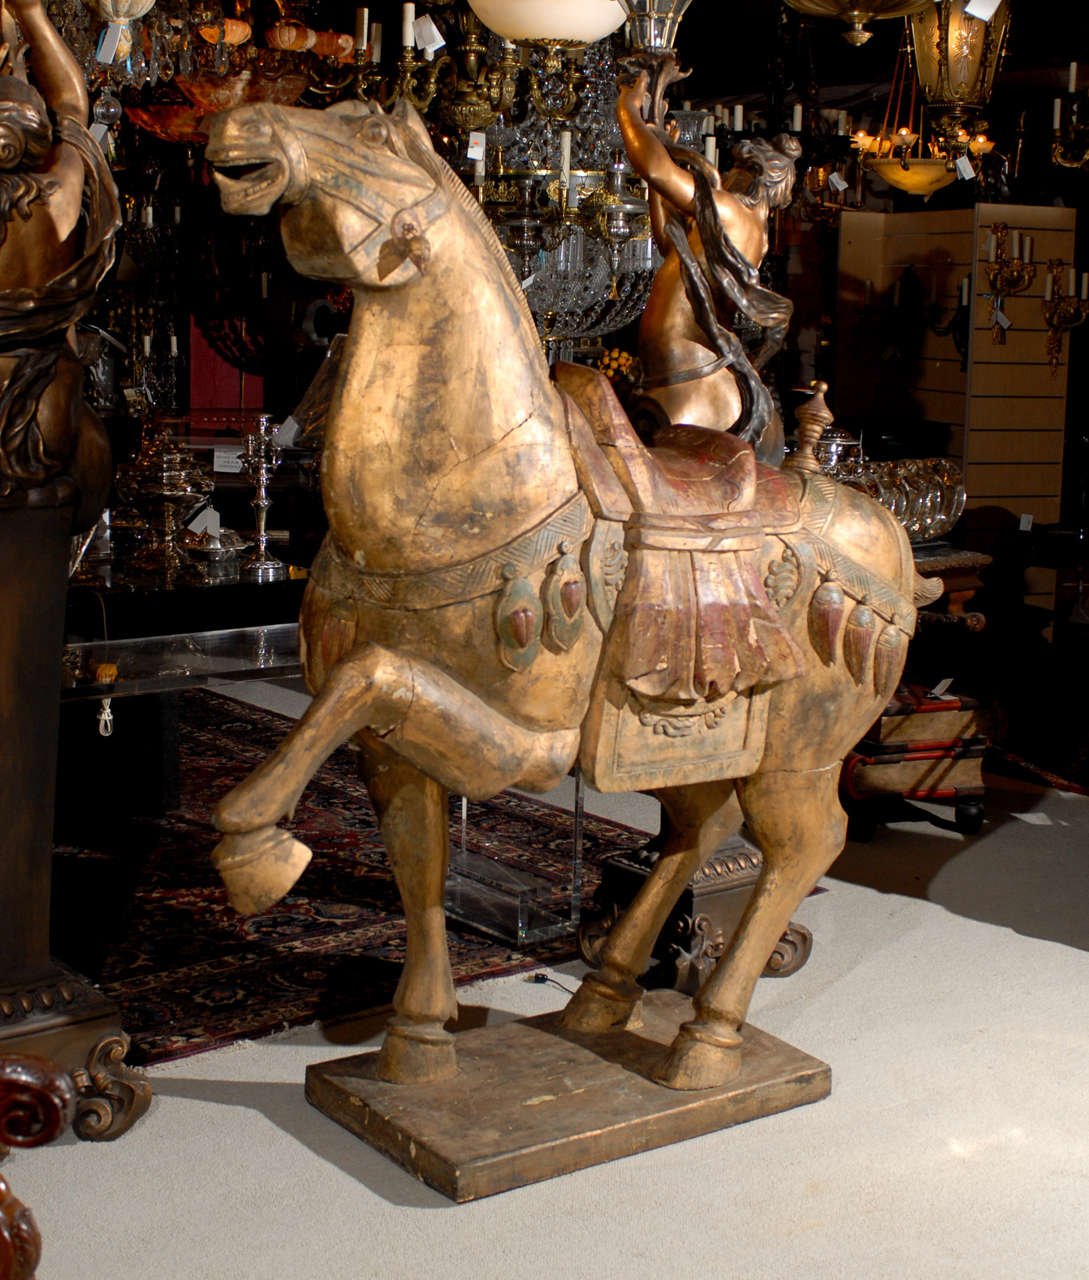 Feines dekorativ geschnitztes Tang-Pferd
Abmessungen: Höhe 74